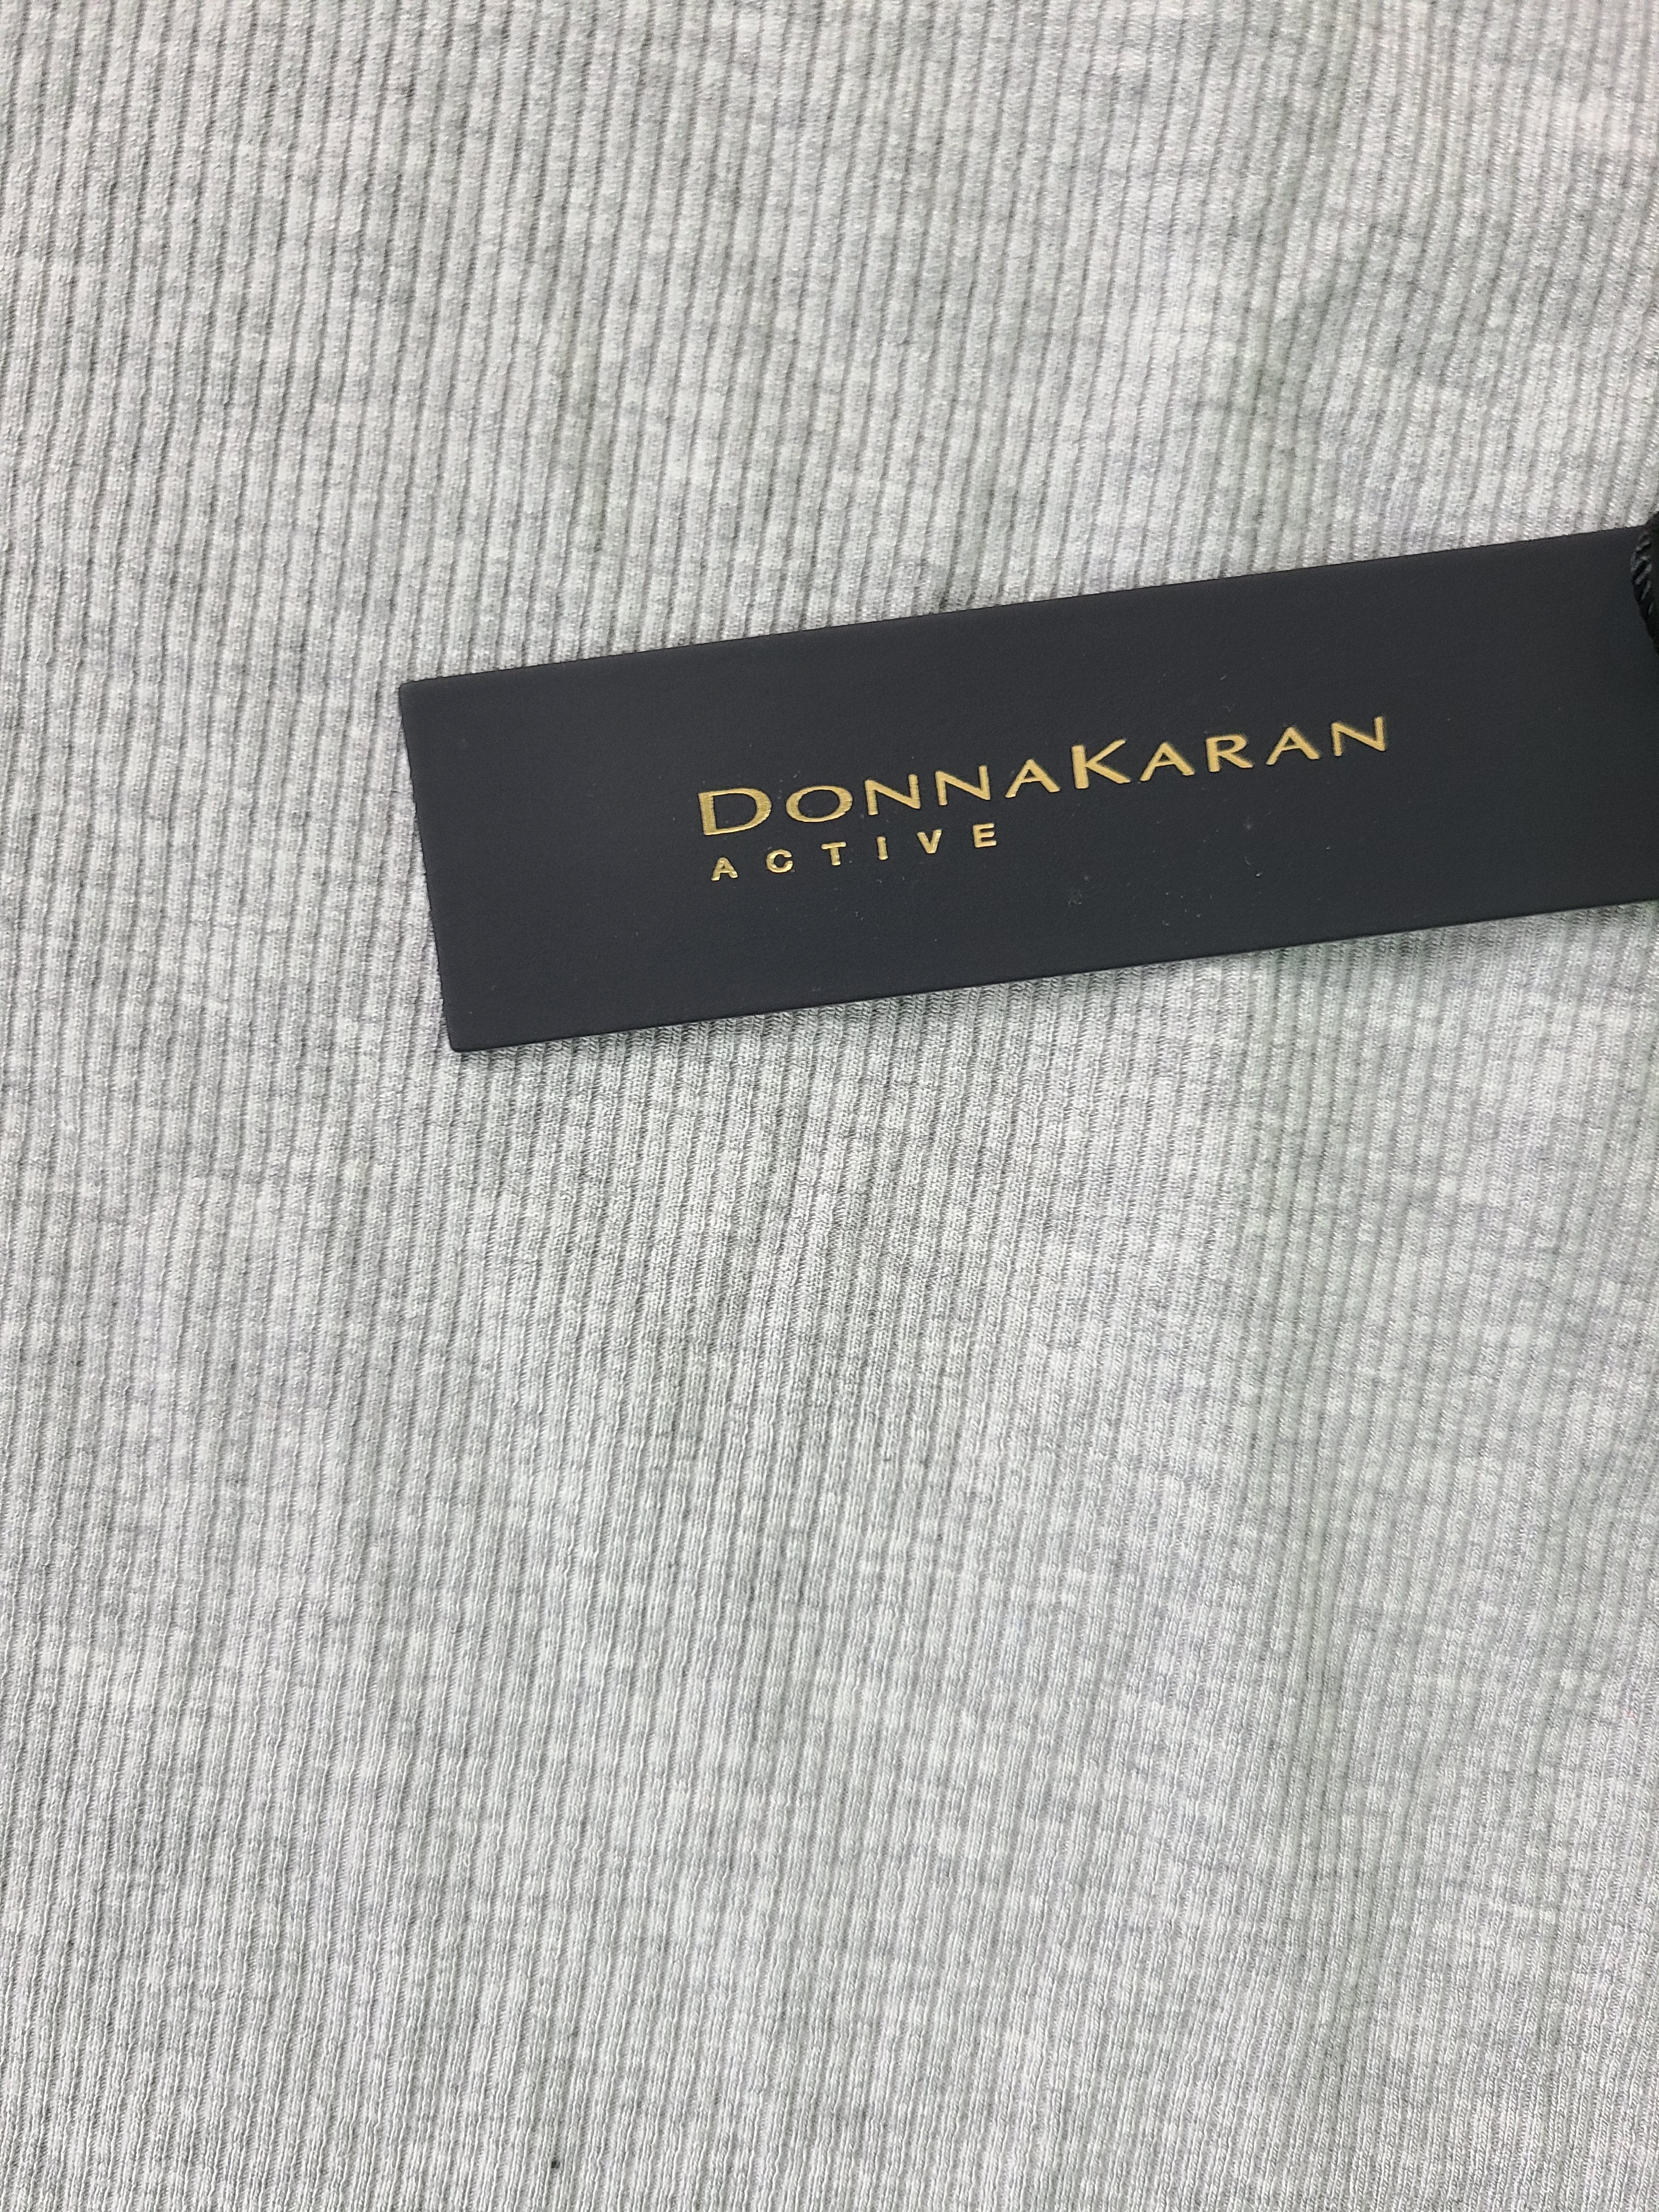 Donnakaran TOP L L by Brands Overstock | Brands Overstock